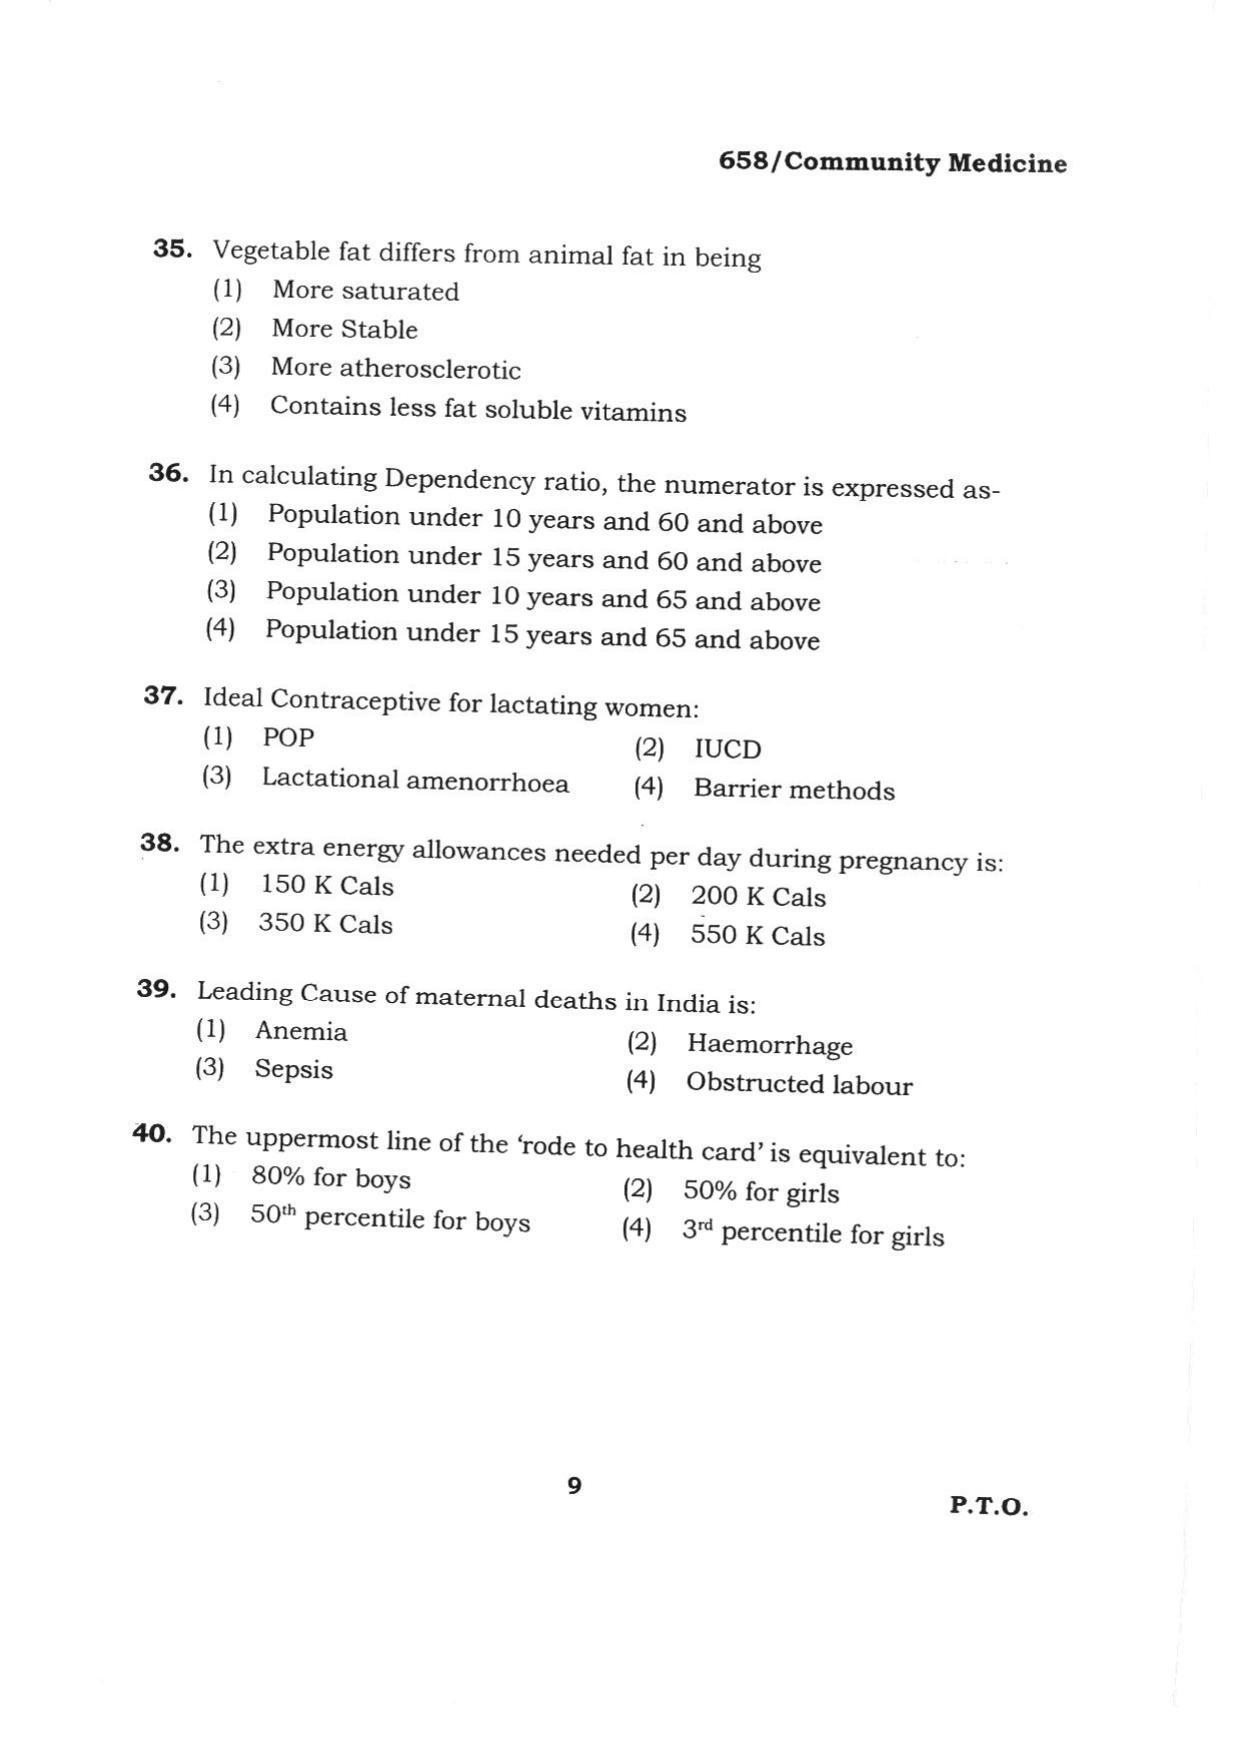 BHU RET COMMUNITY MEDICINE 2015 Question Paper - Page 9